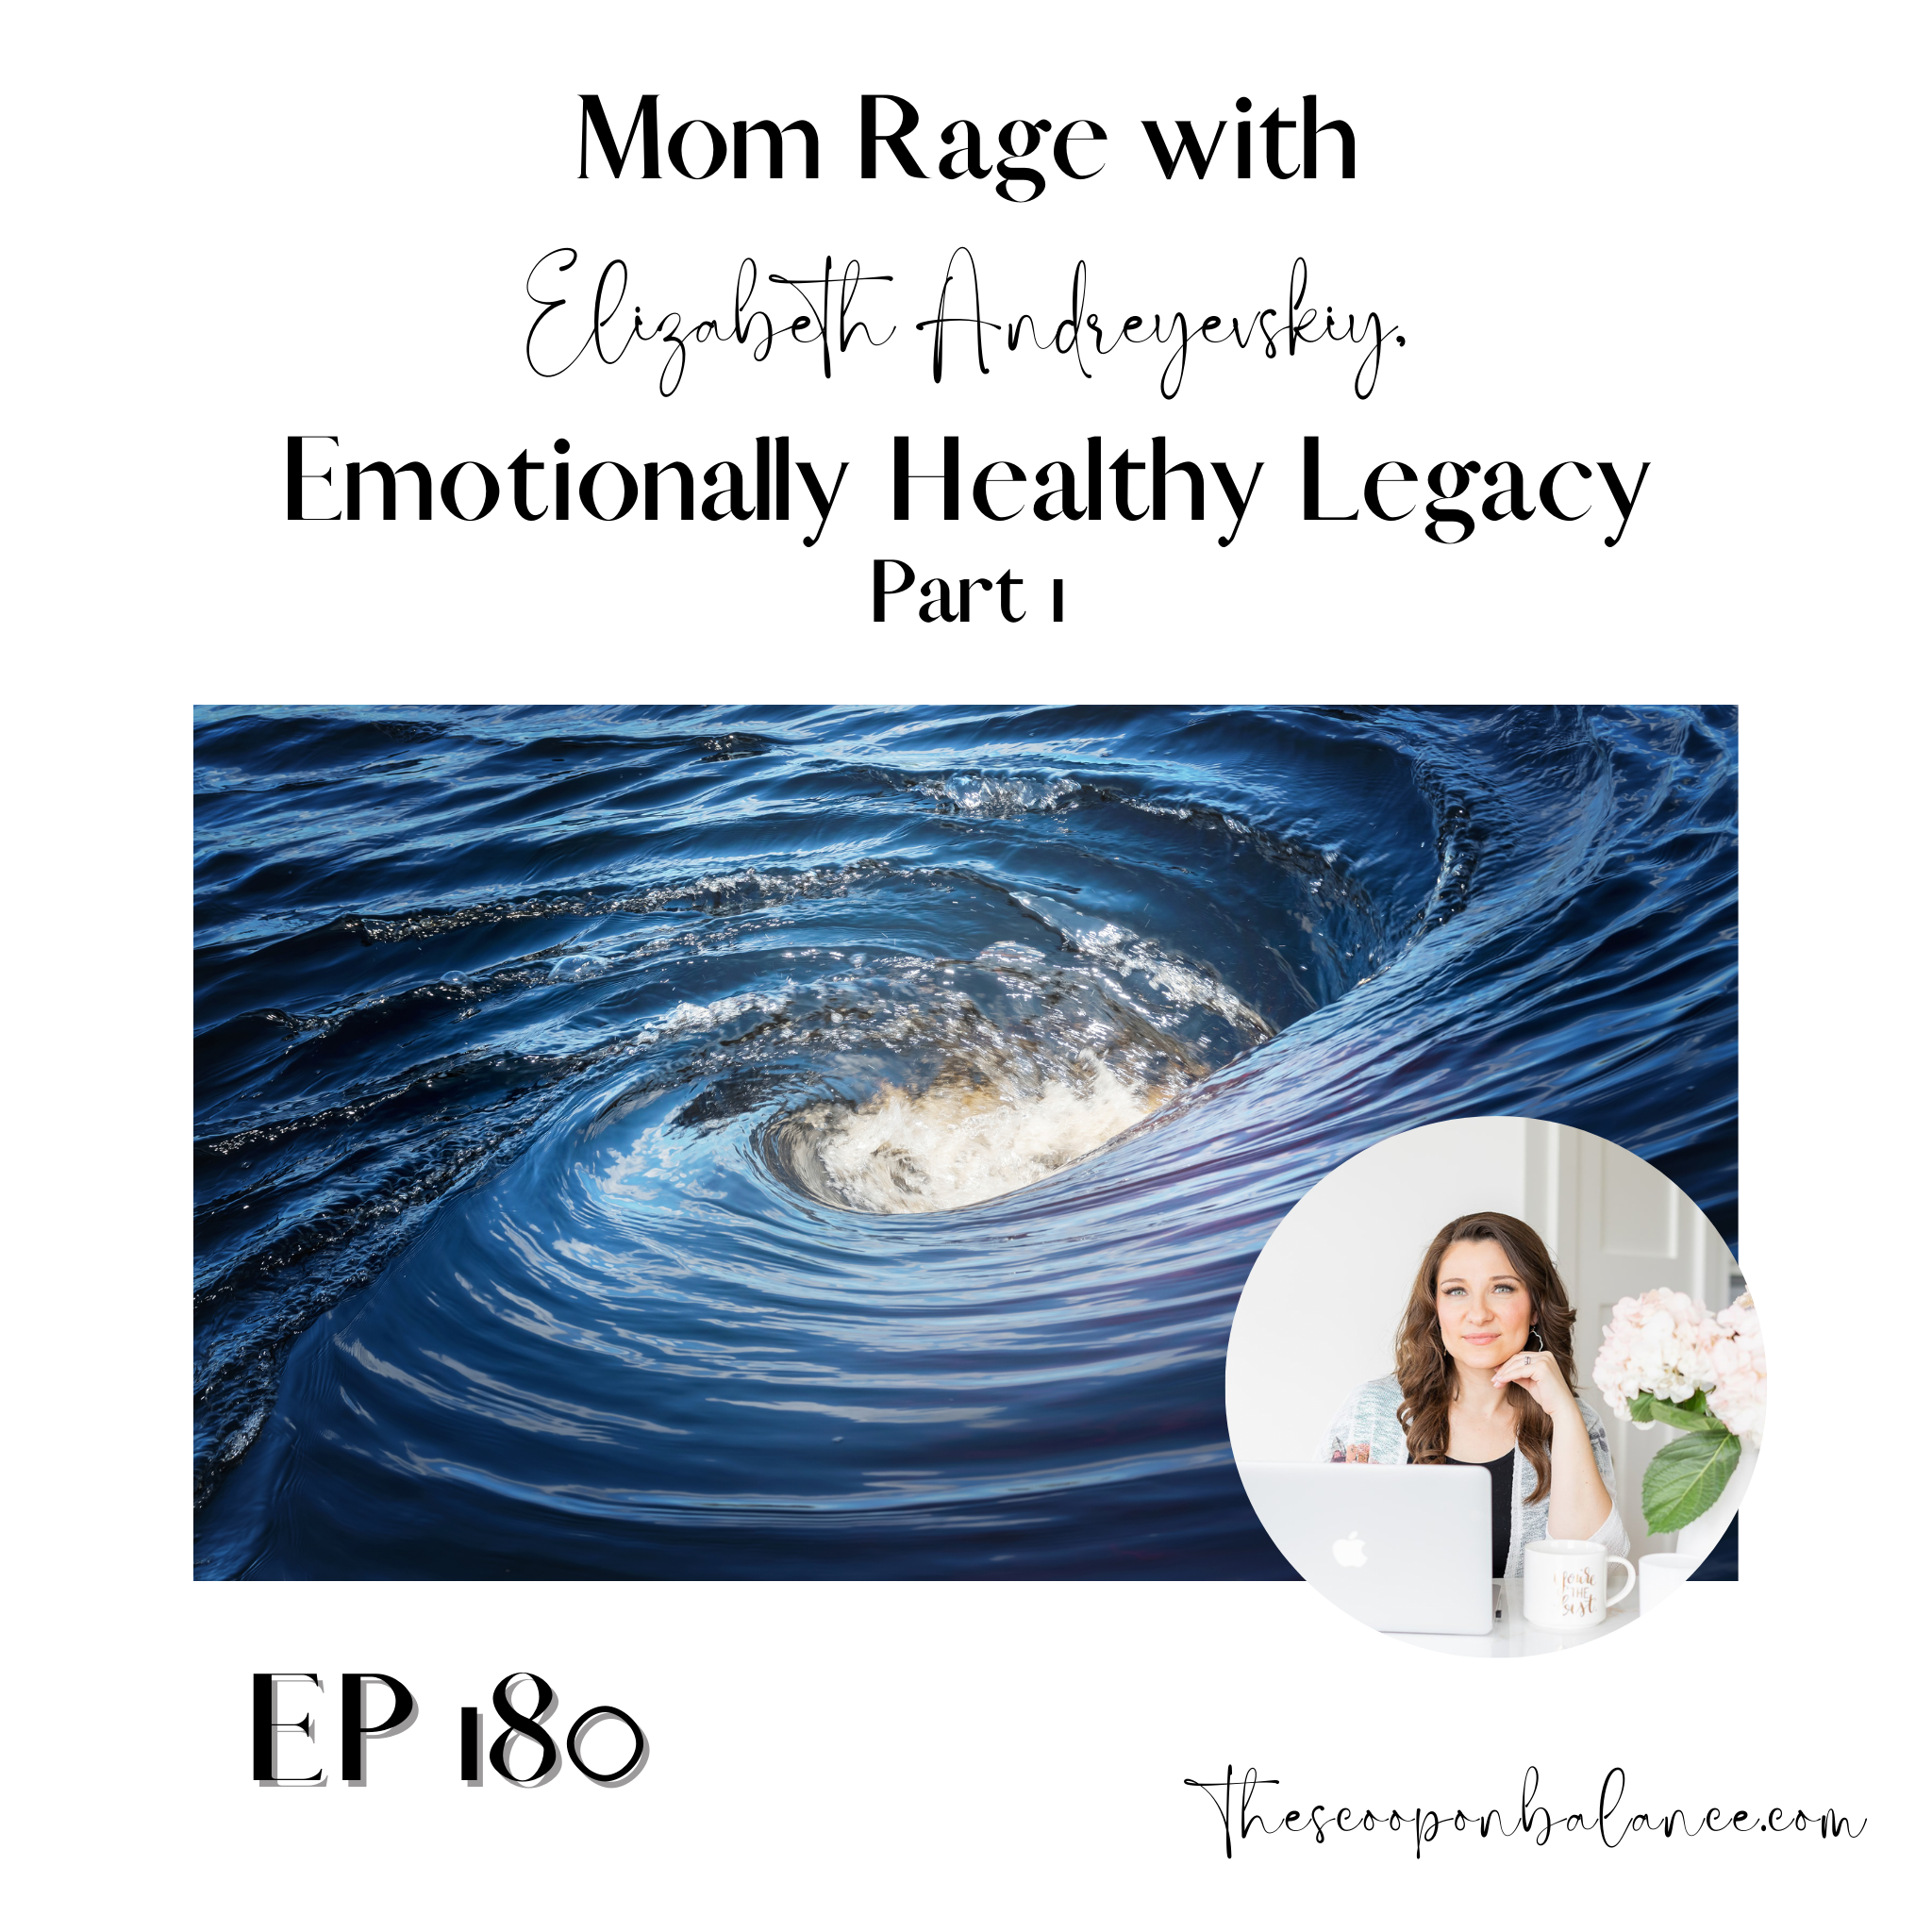 Ep 180: Mom Rage with Elizabeth Andreyevskiy, Part 1